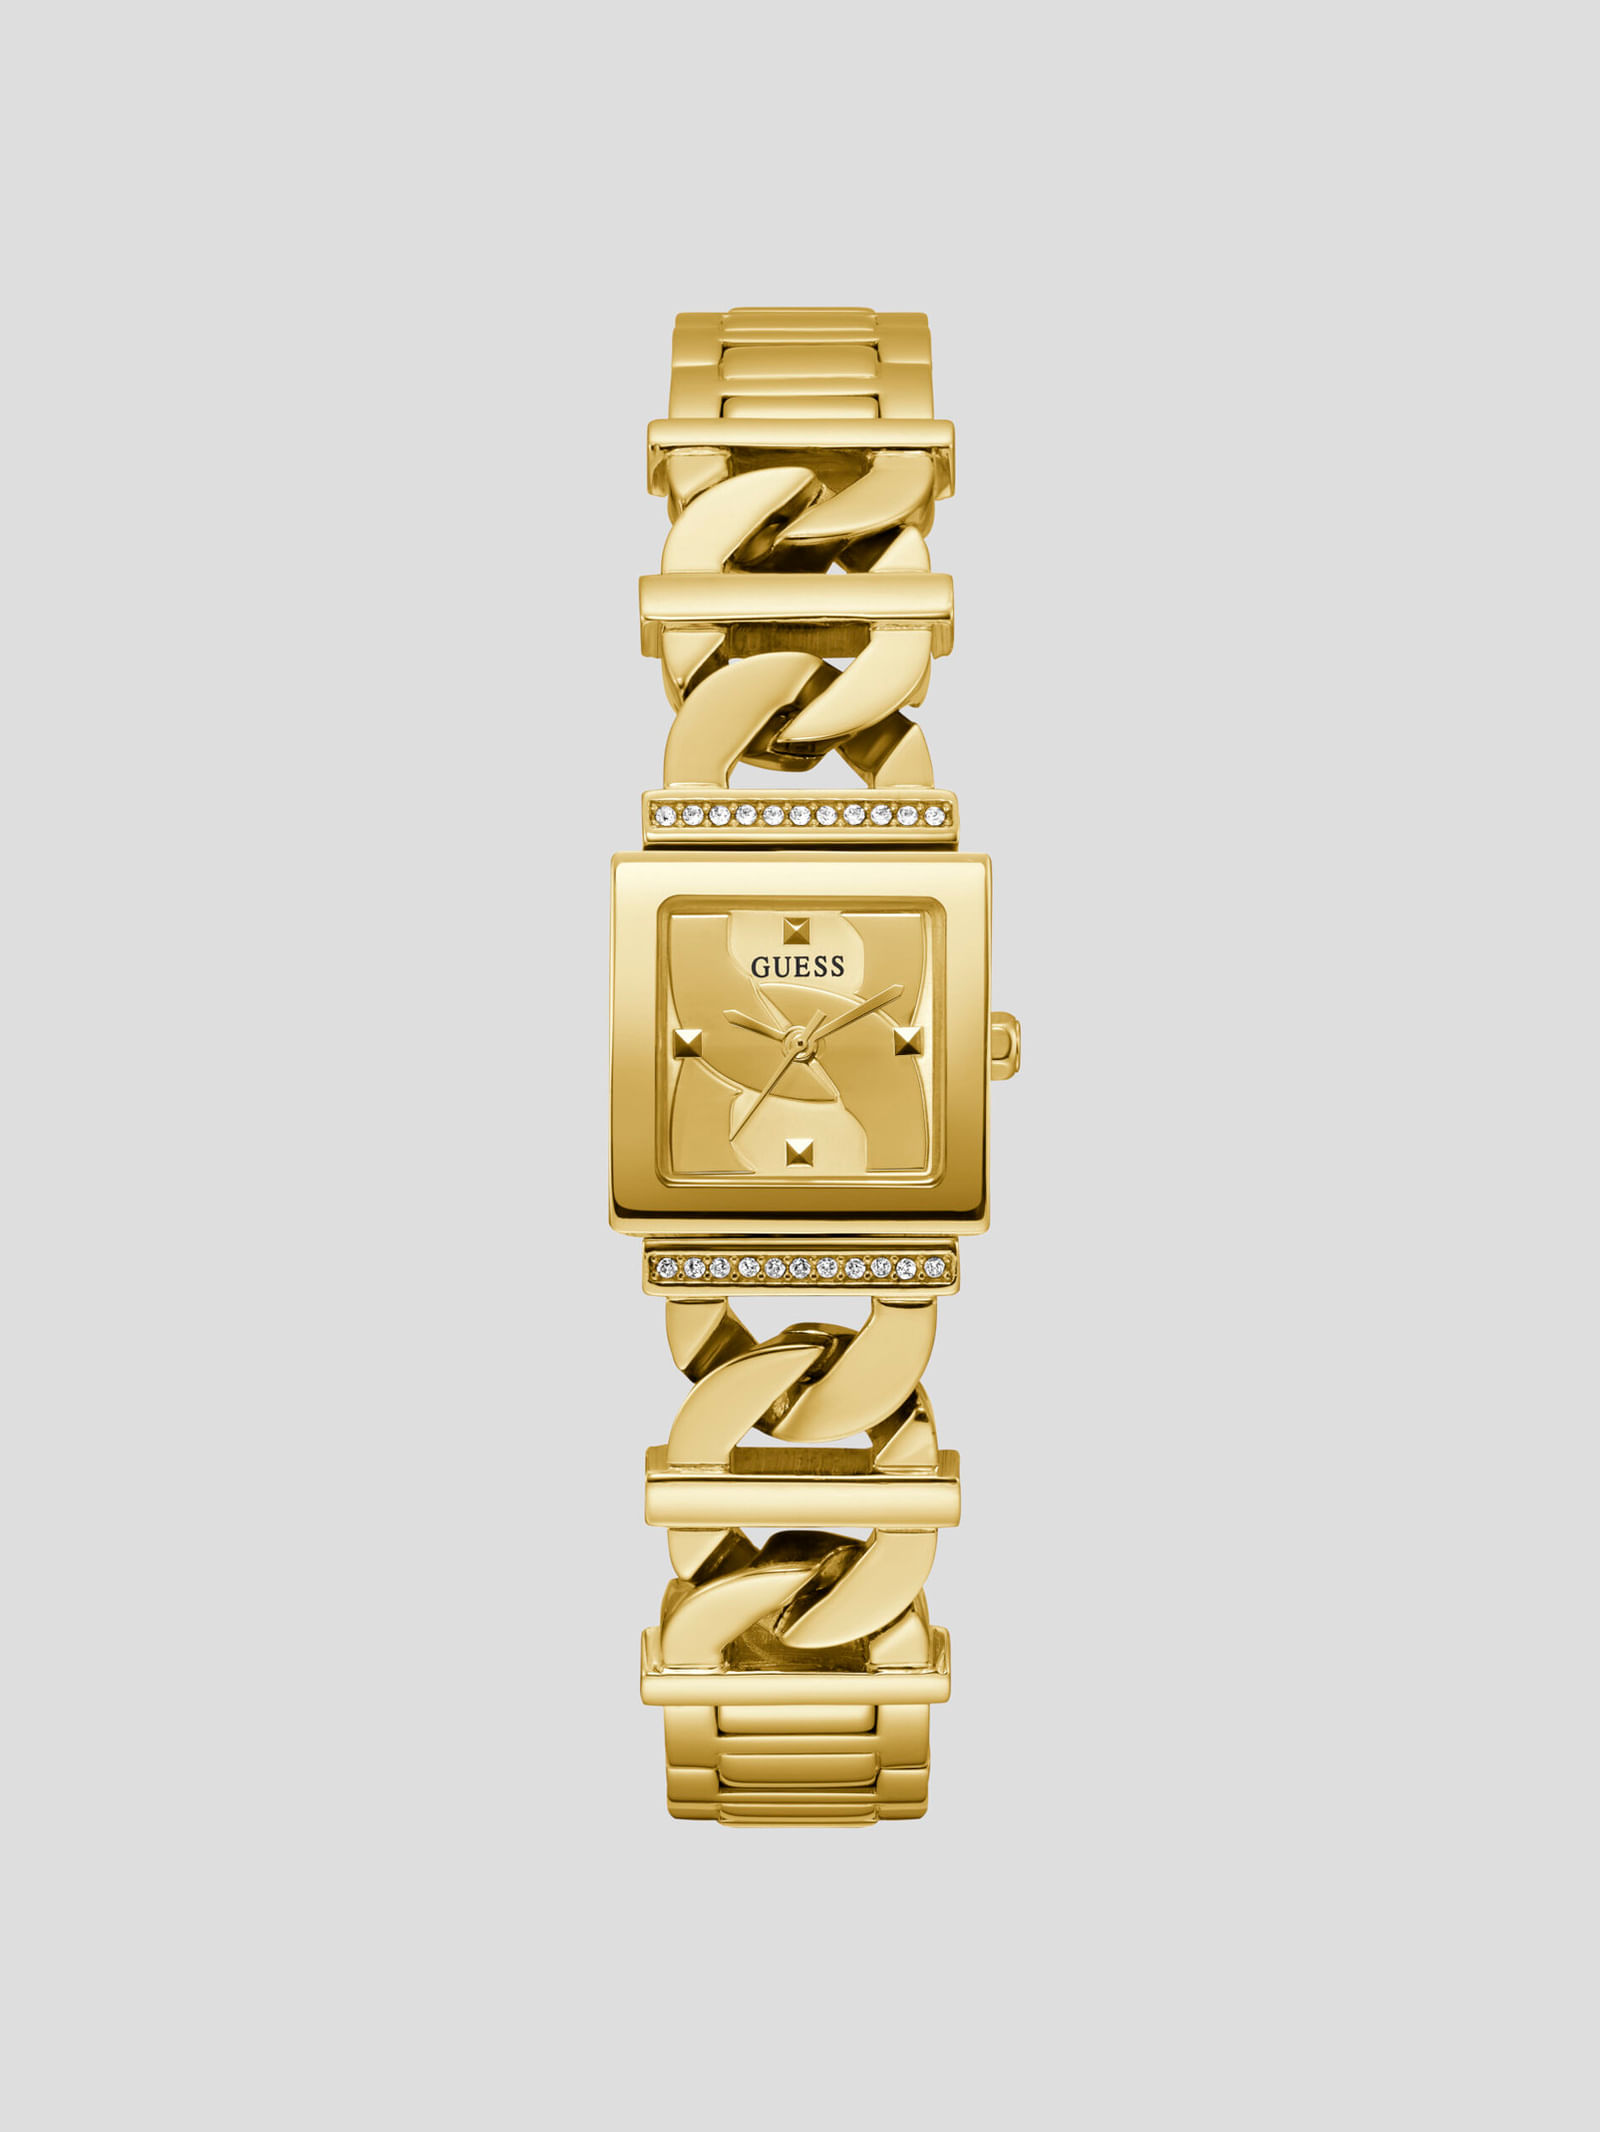 Reloj mujer GUESS GW0603L2 – Complementos Tabú